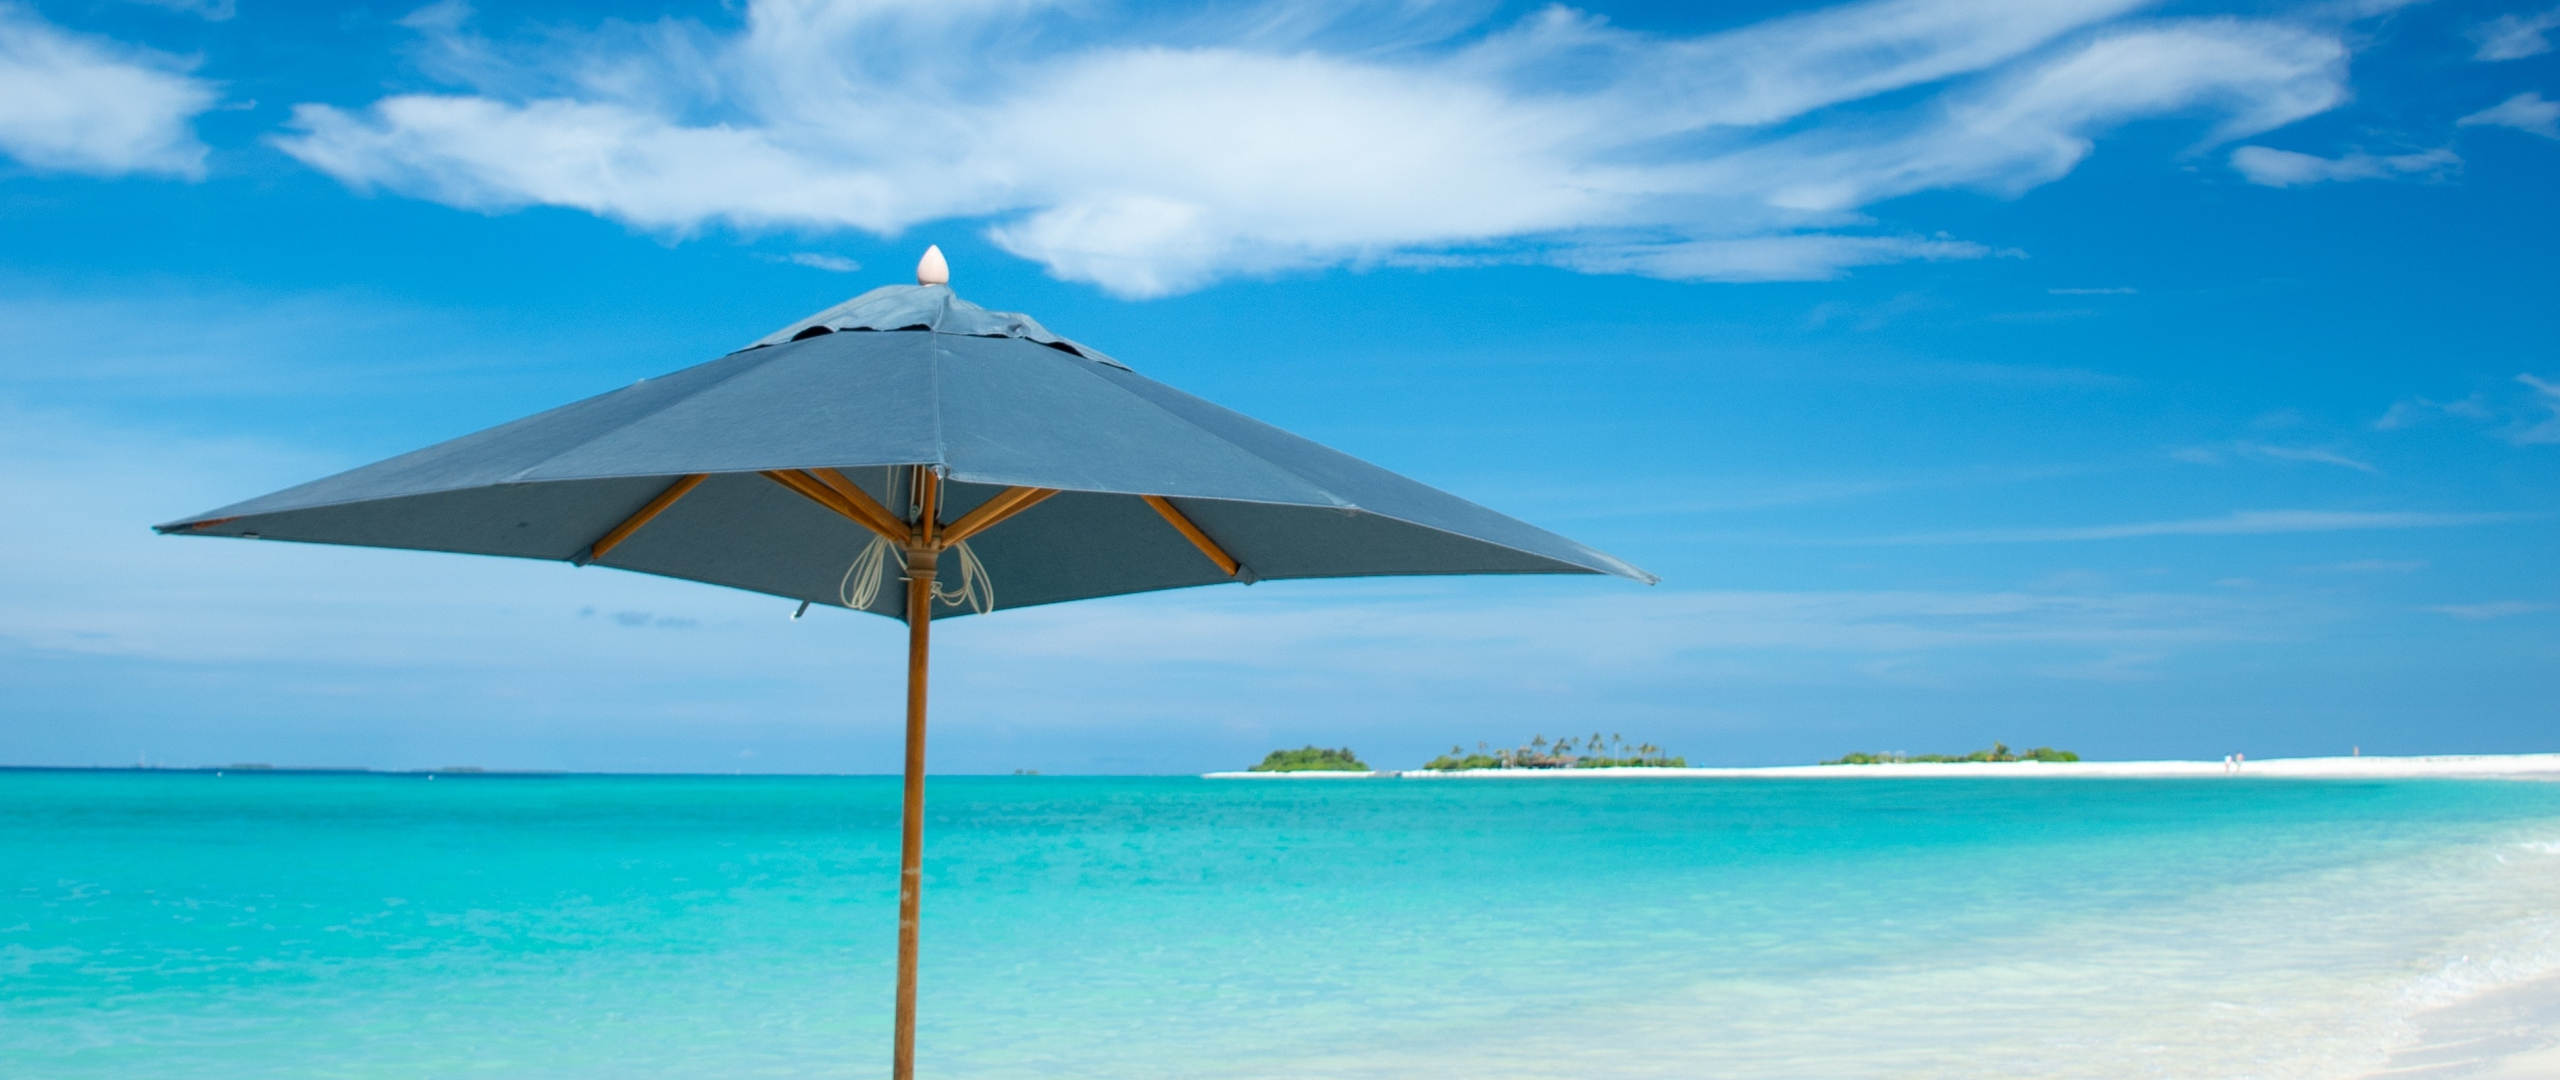 Download umbrella, beach, tropical island, summer 2560x1080 wallpaper, dual wide 2560x1080 HD image, background, 17657